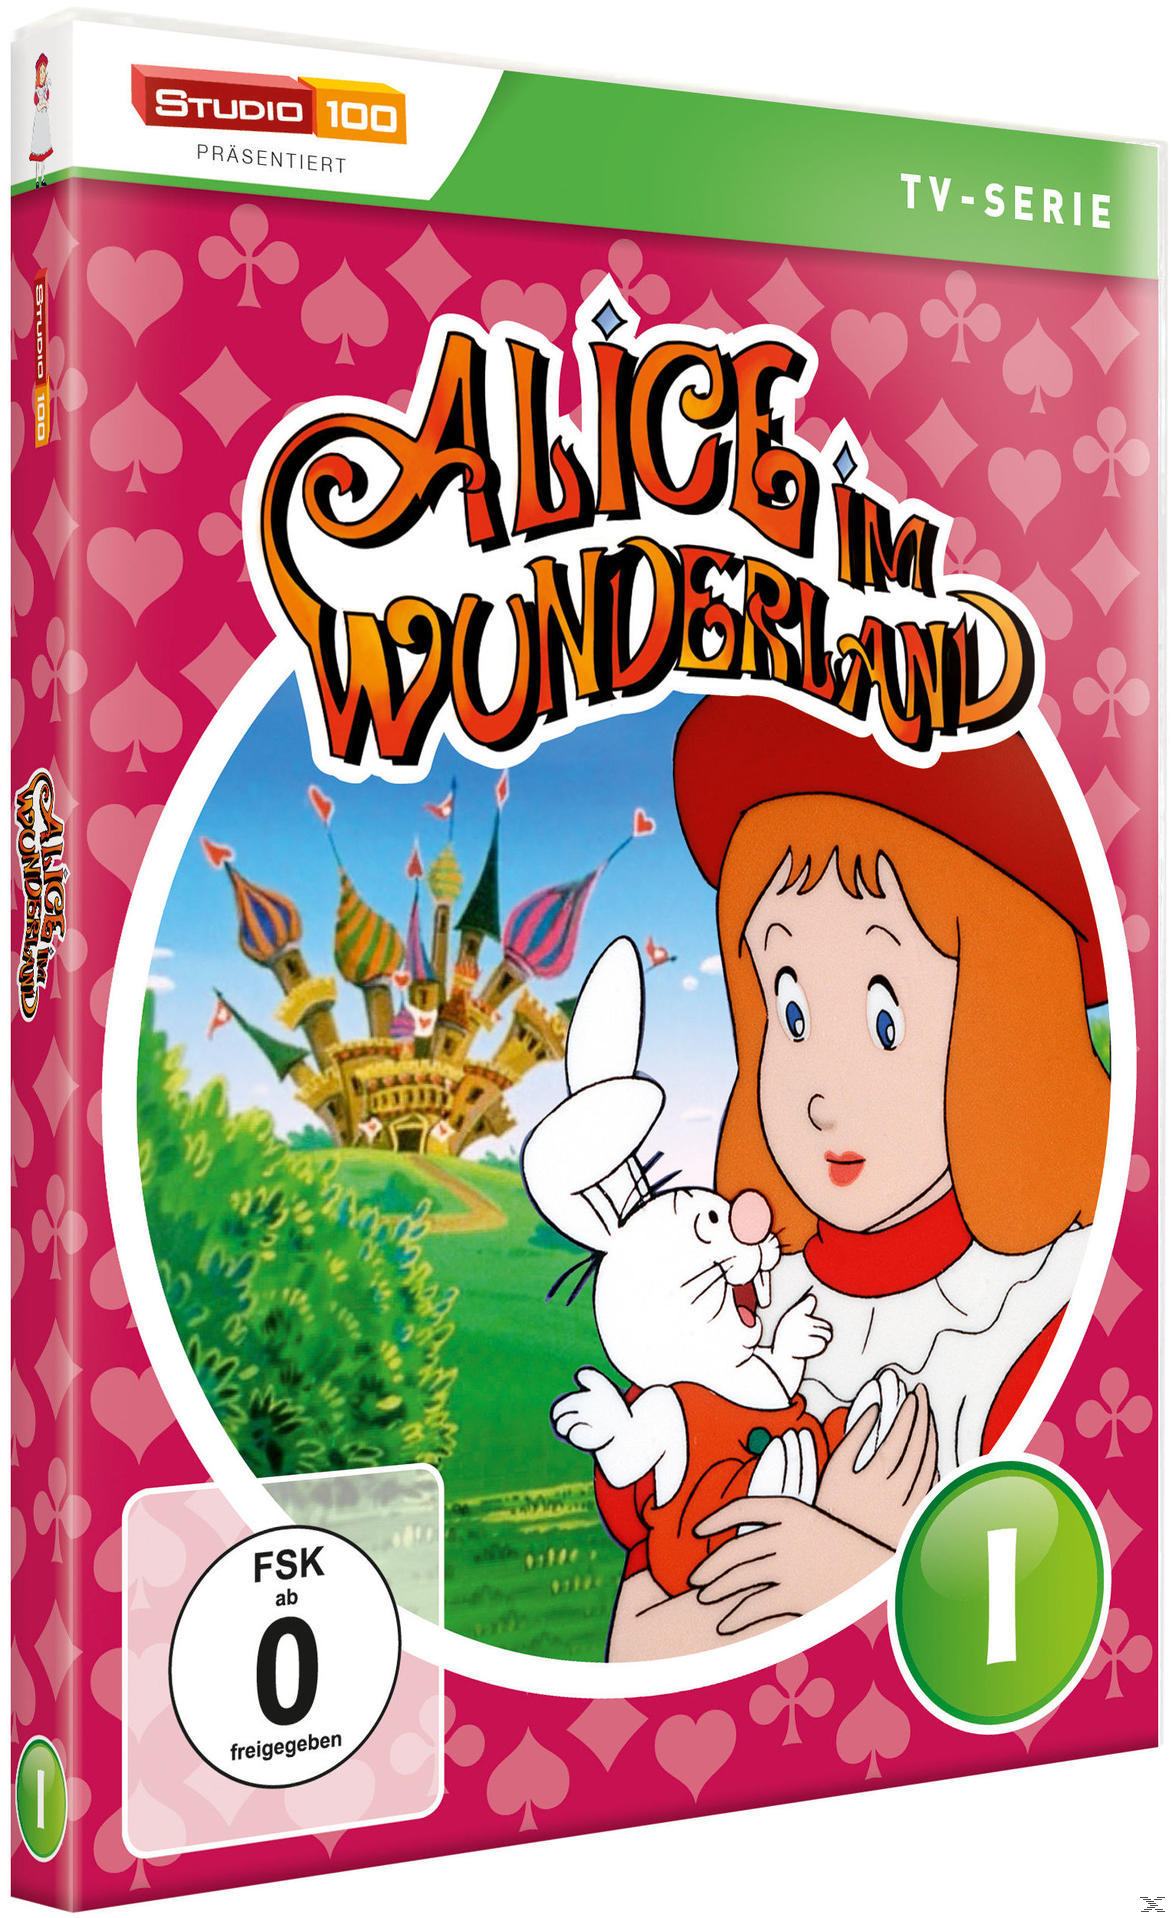 1 - Alice DVD Teil im Wunderland